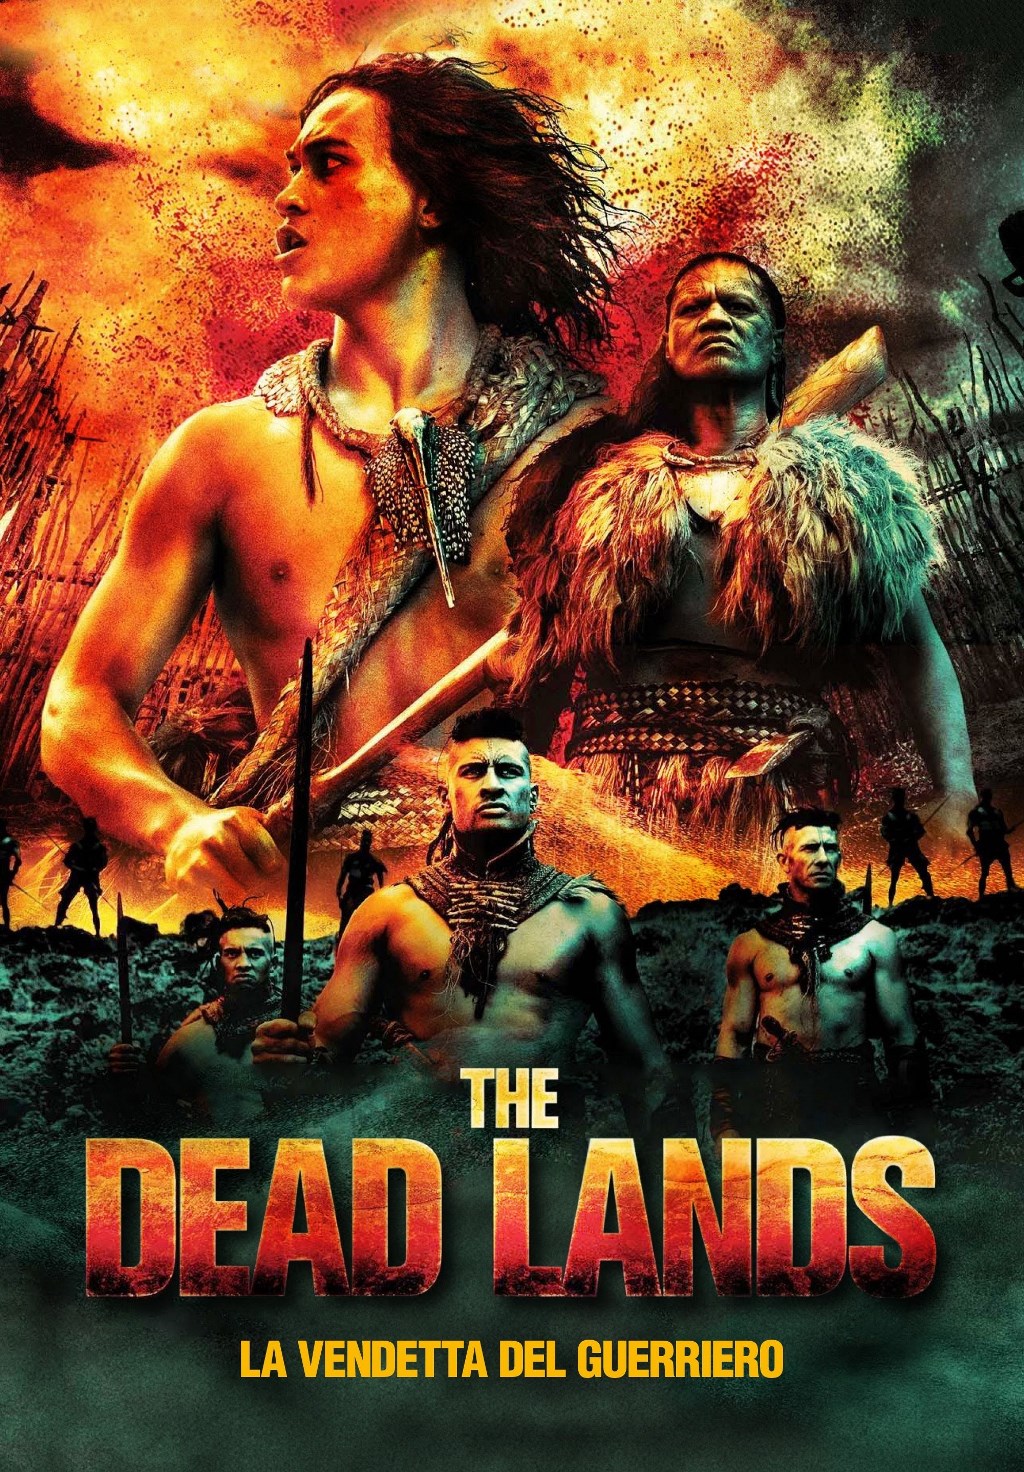 The Dead Lands – La vendetta del Guerriero [HD] (2014)